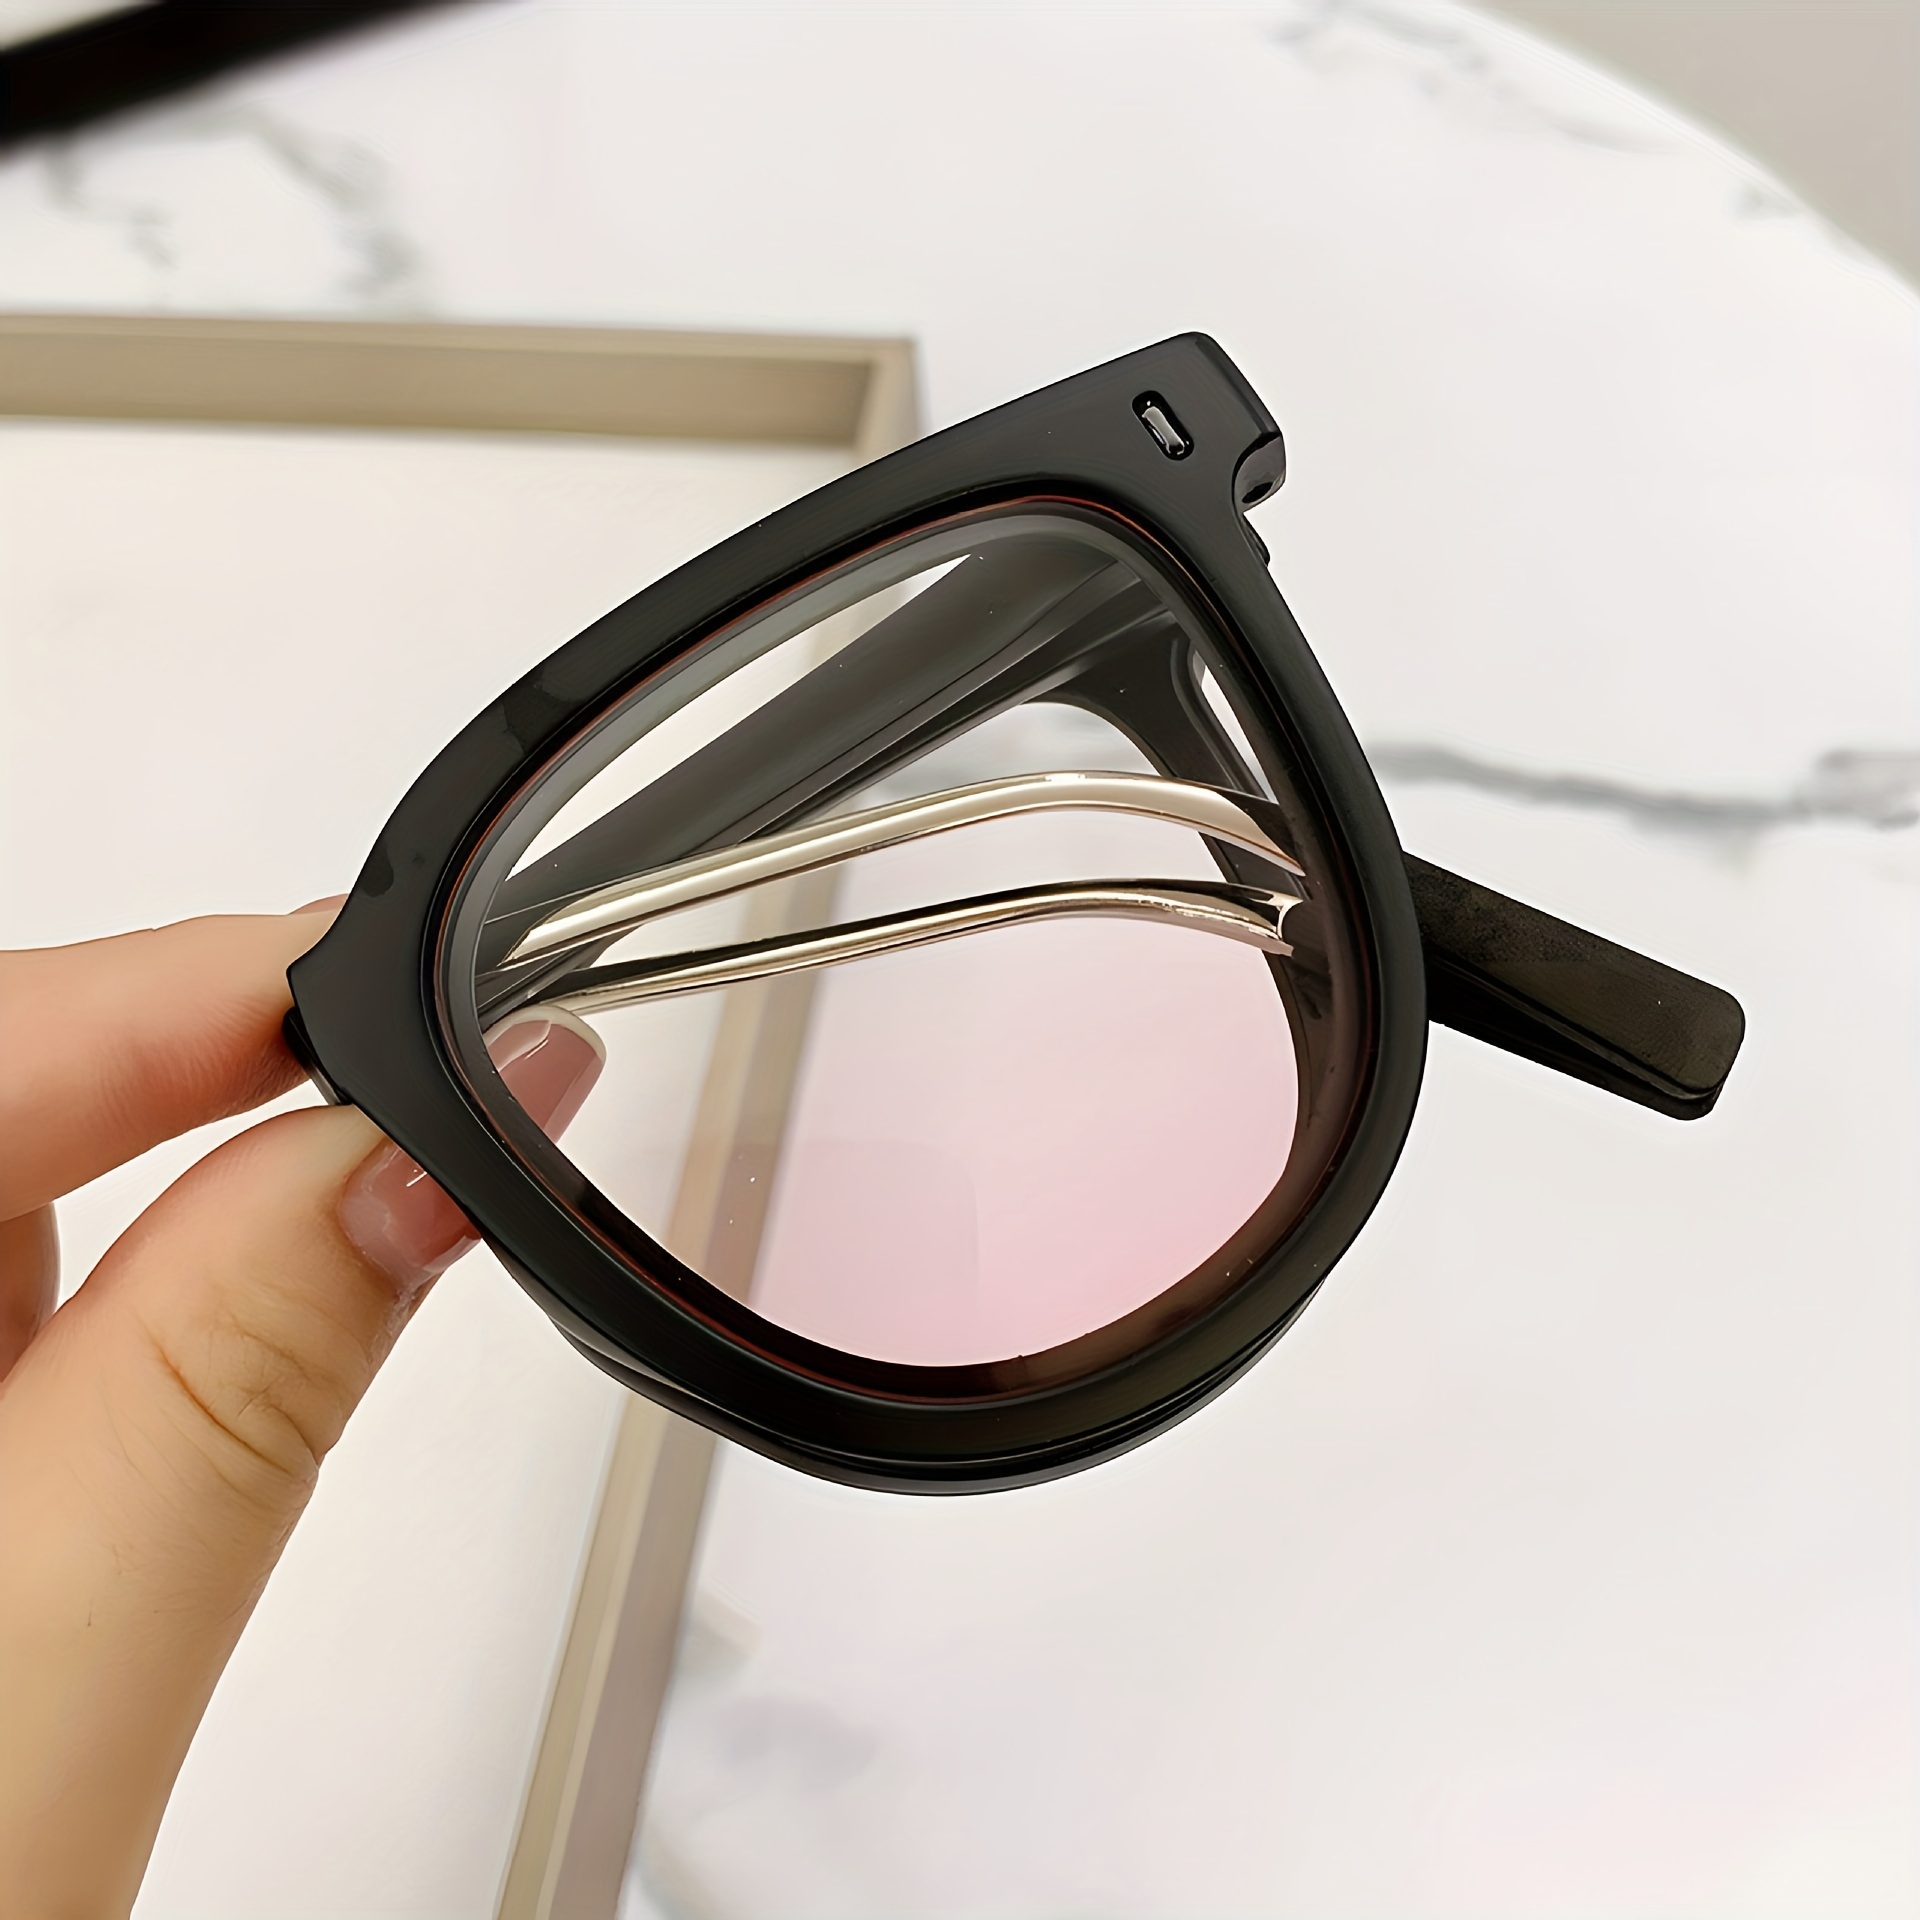 Trendy Square Polarized Sunglasses for Women Men Black Transparent